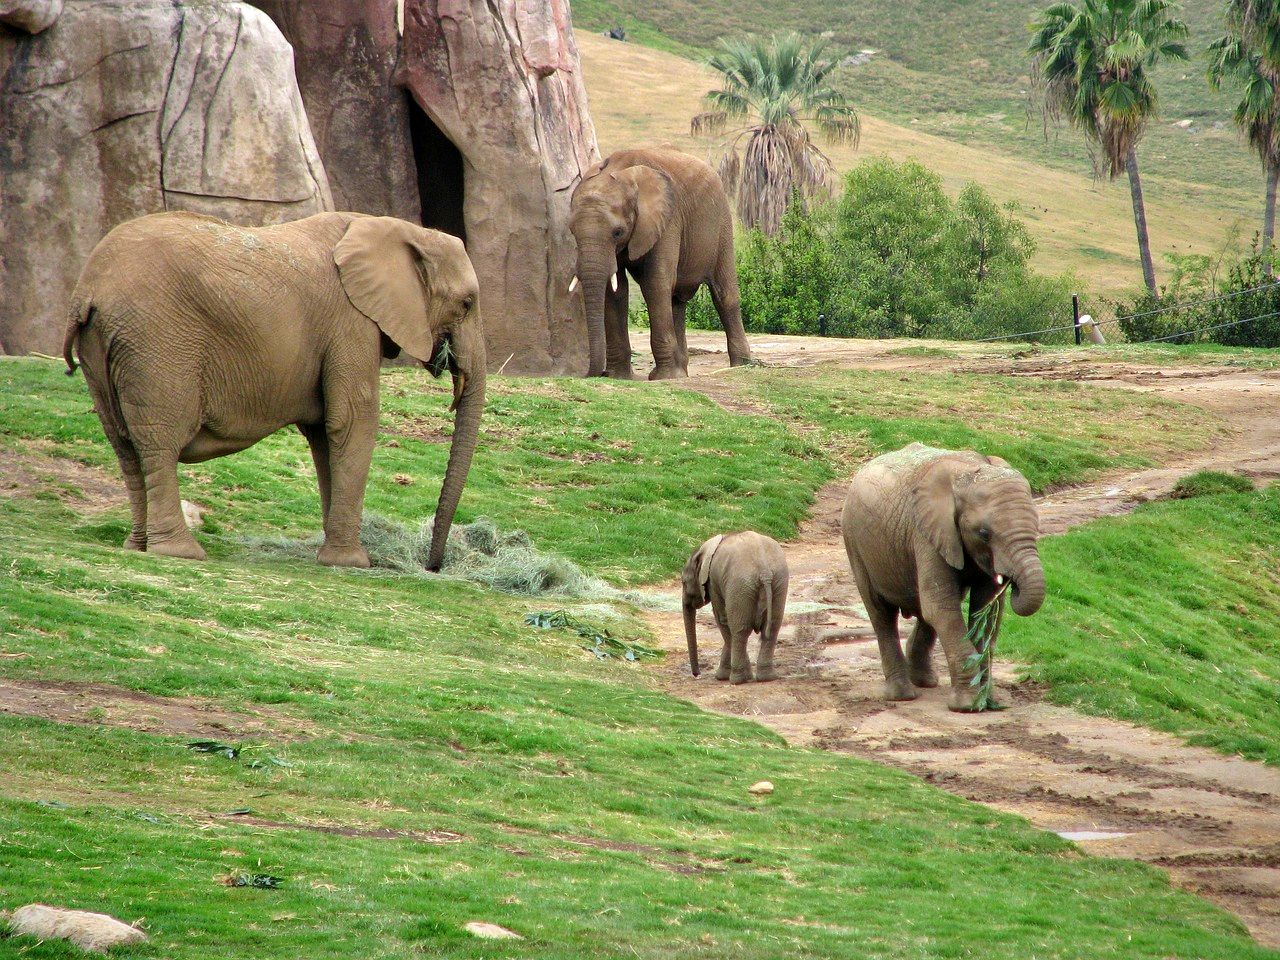 Elephants in San Diego Zoo